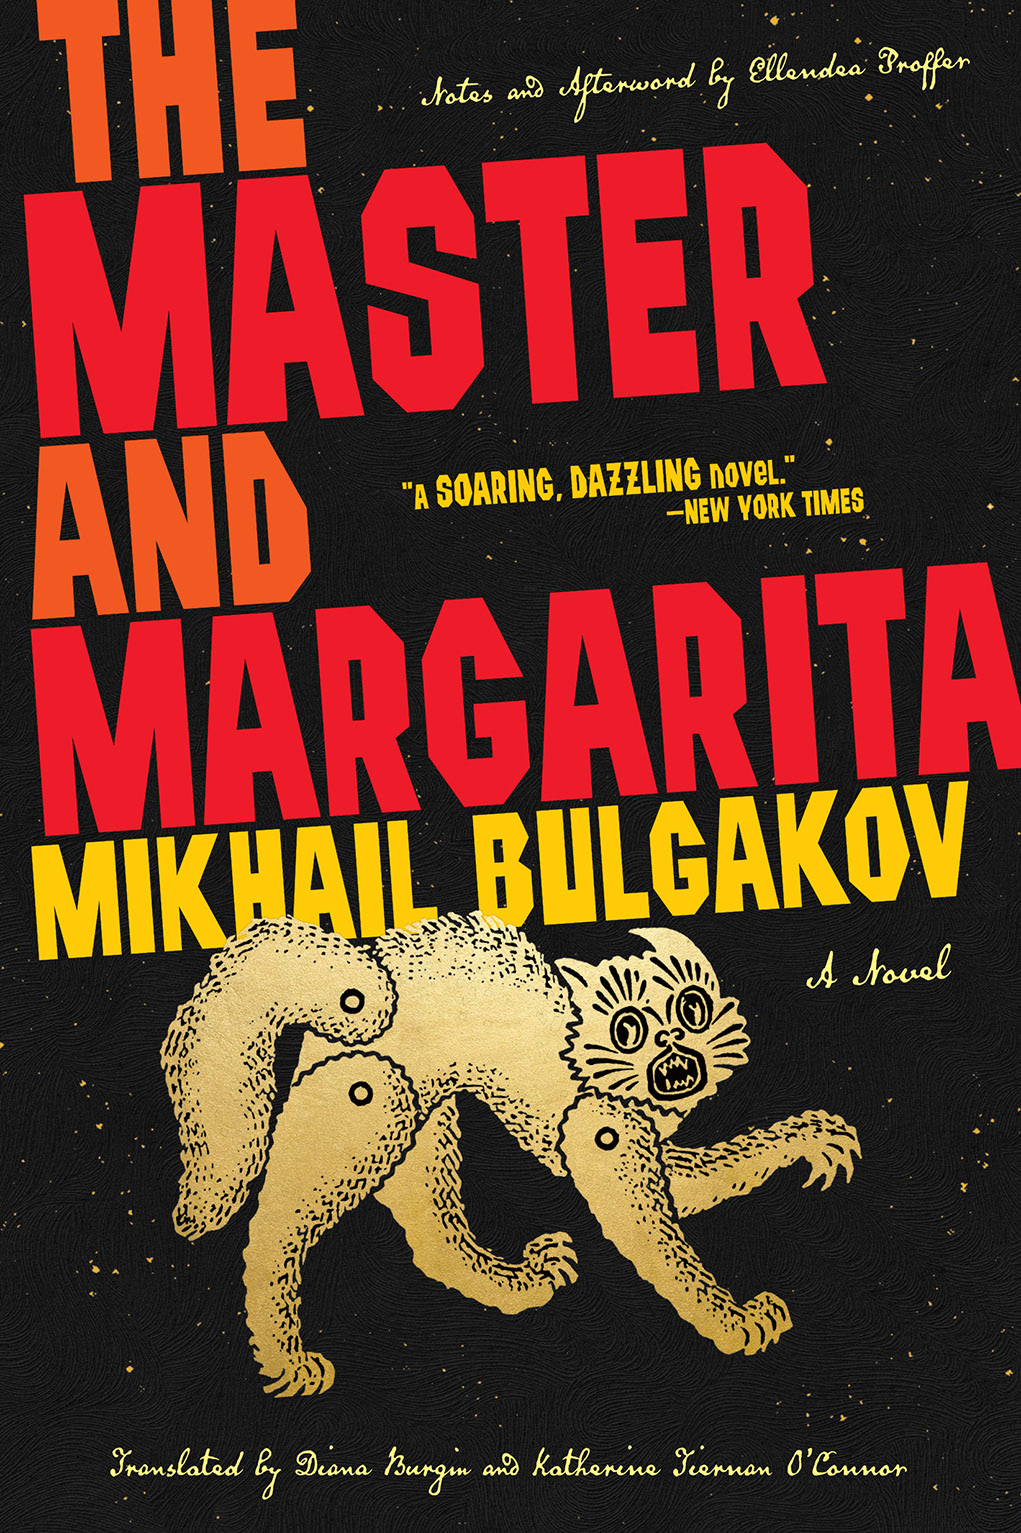 Михаил Афанасьевич Булгаков, KatherineTiernan O'Connor, Diana Burgin: Master and Margarita (2021, Abrams, Inc.)